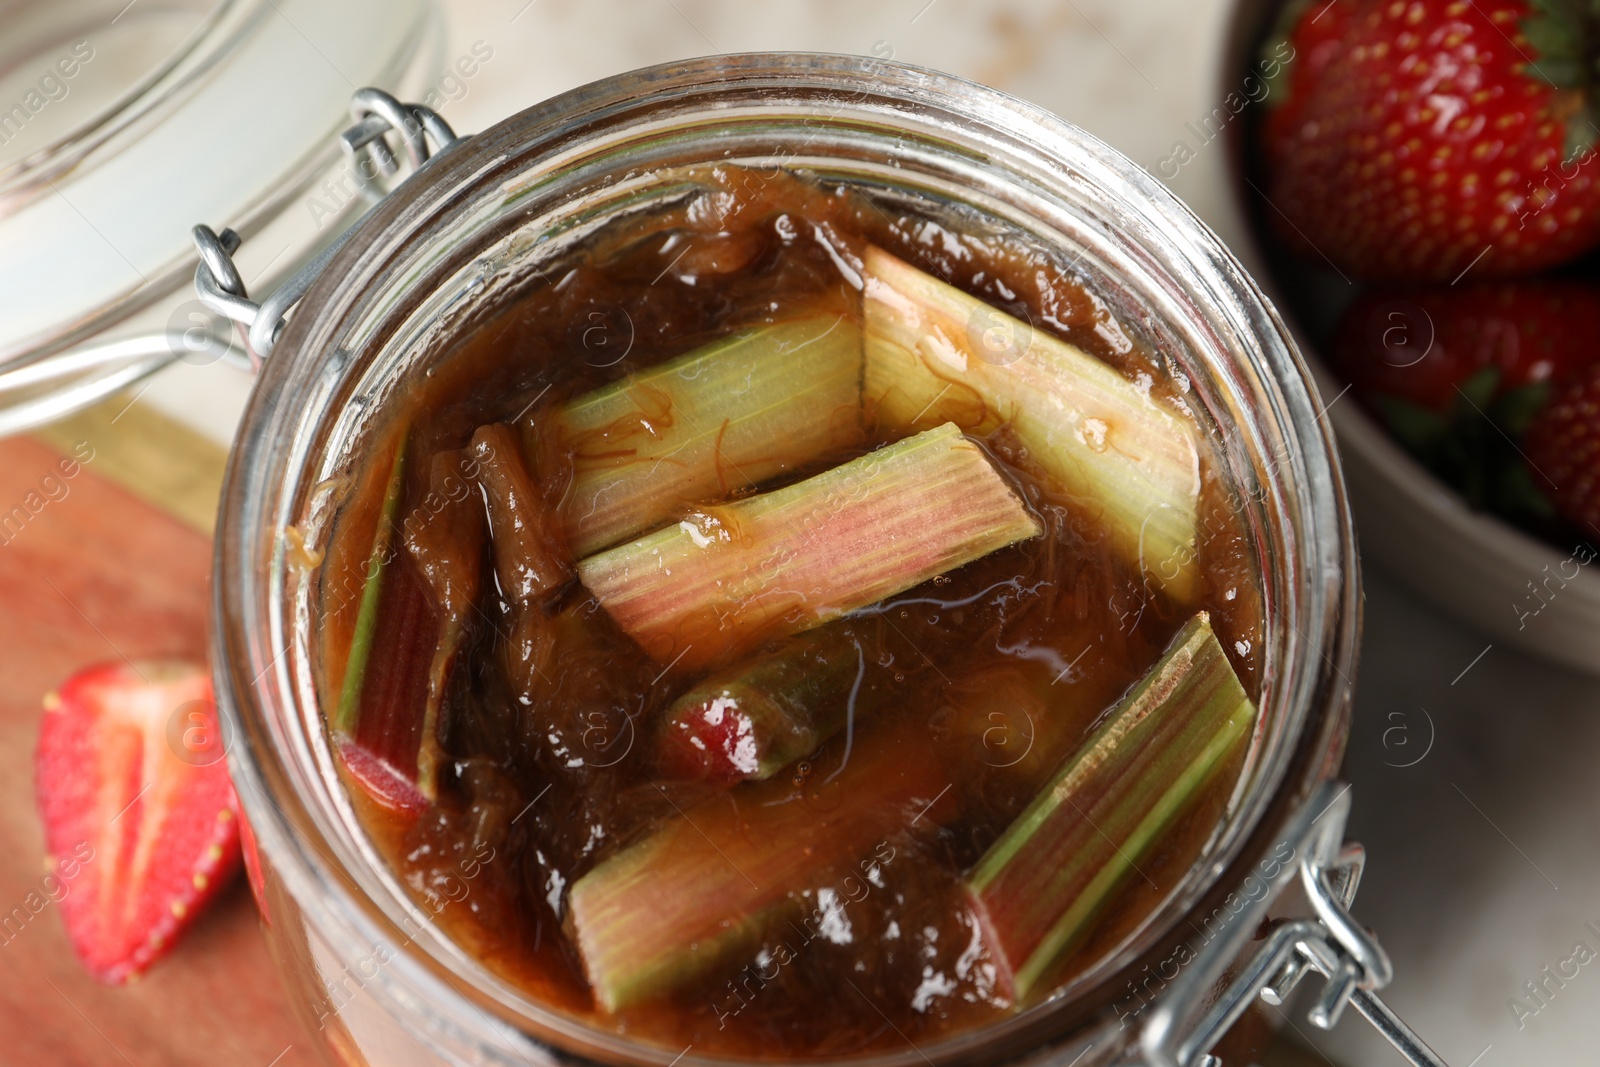 Photo of Jar of tasty rhubarb jam and fresh strawberries on table, closeup